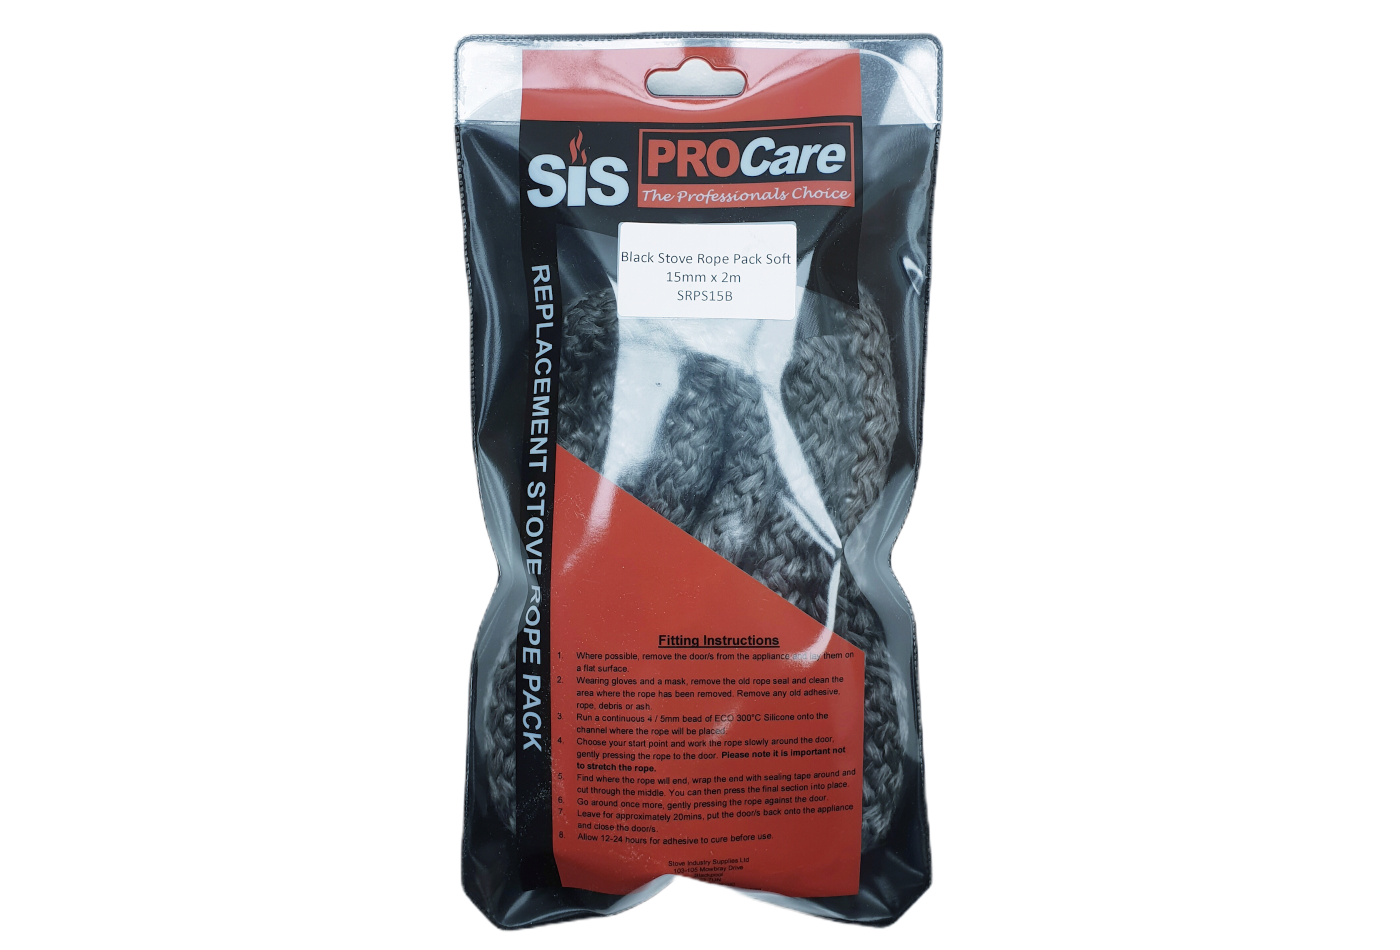 SiS Procare Black 15 milimetre x 2 metre Soft Stove Rope Pack - product code SRPS15B